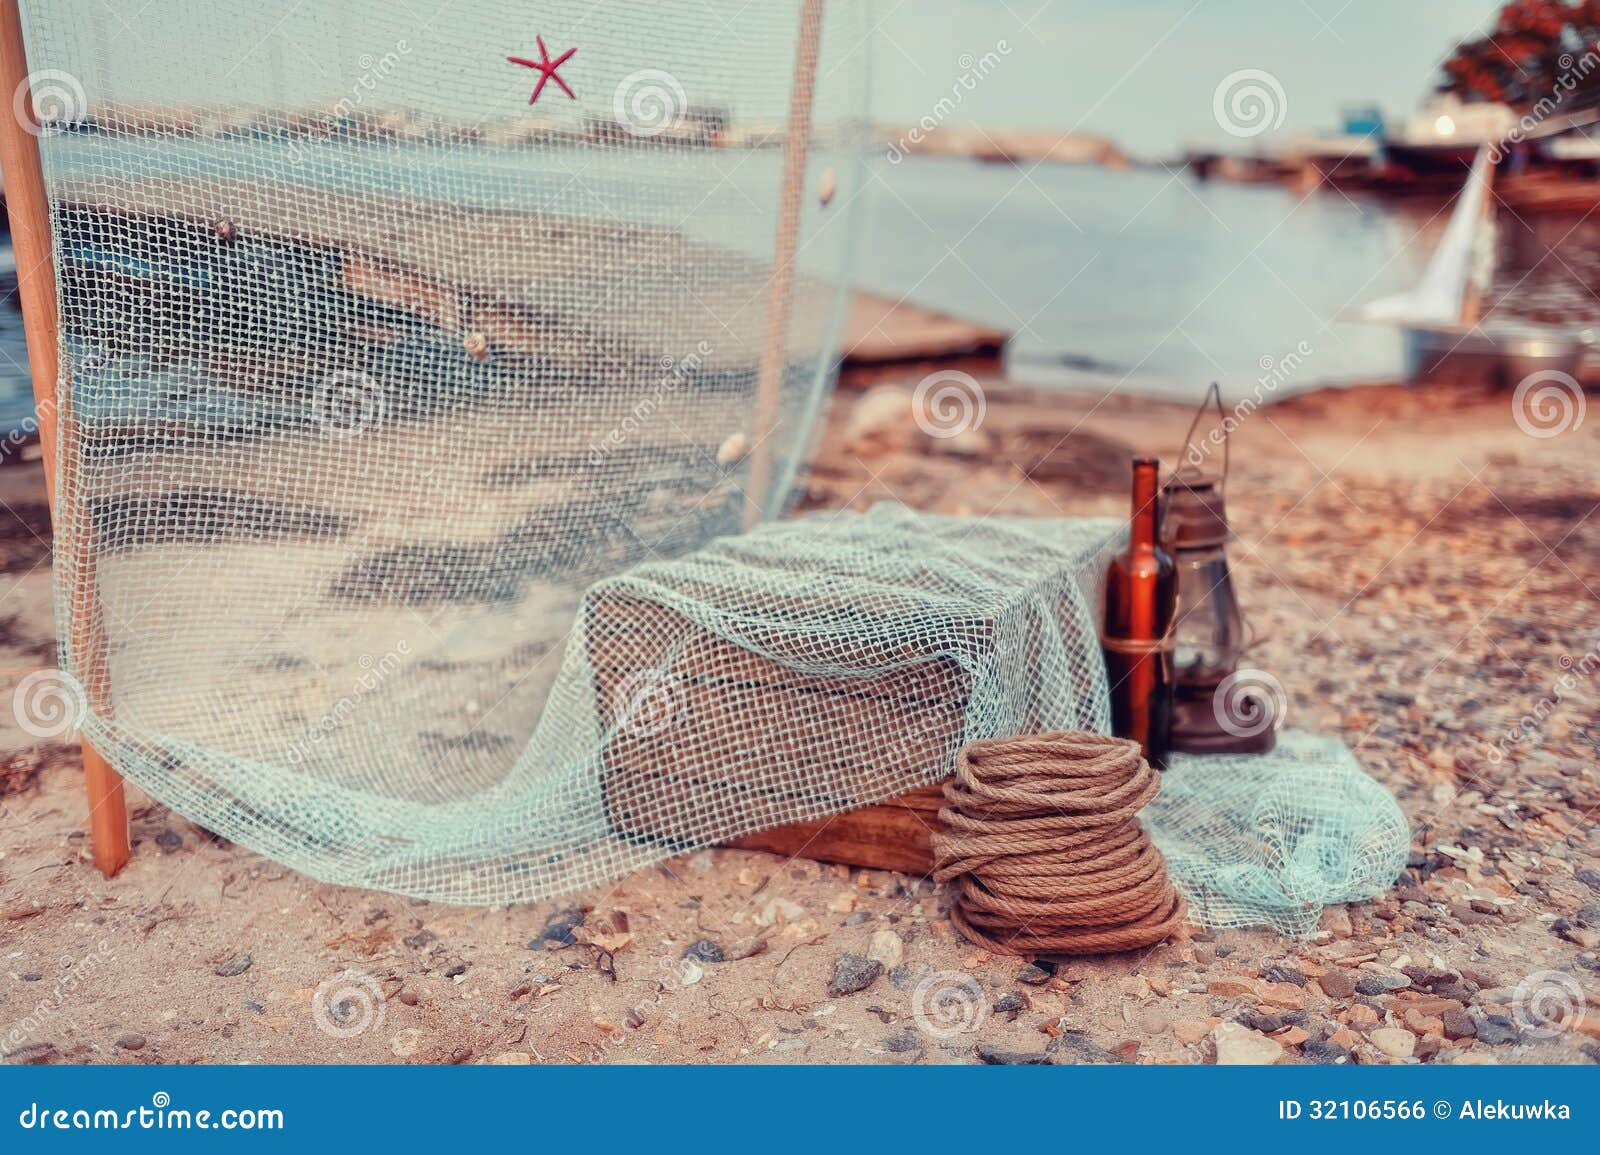 https://thumbs.dreamstime.com/z/maritime-composition-bay-wooden-pier-fishing-nets-marine-32106566.jpg